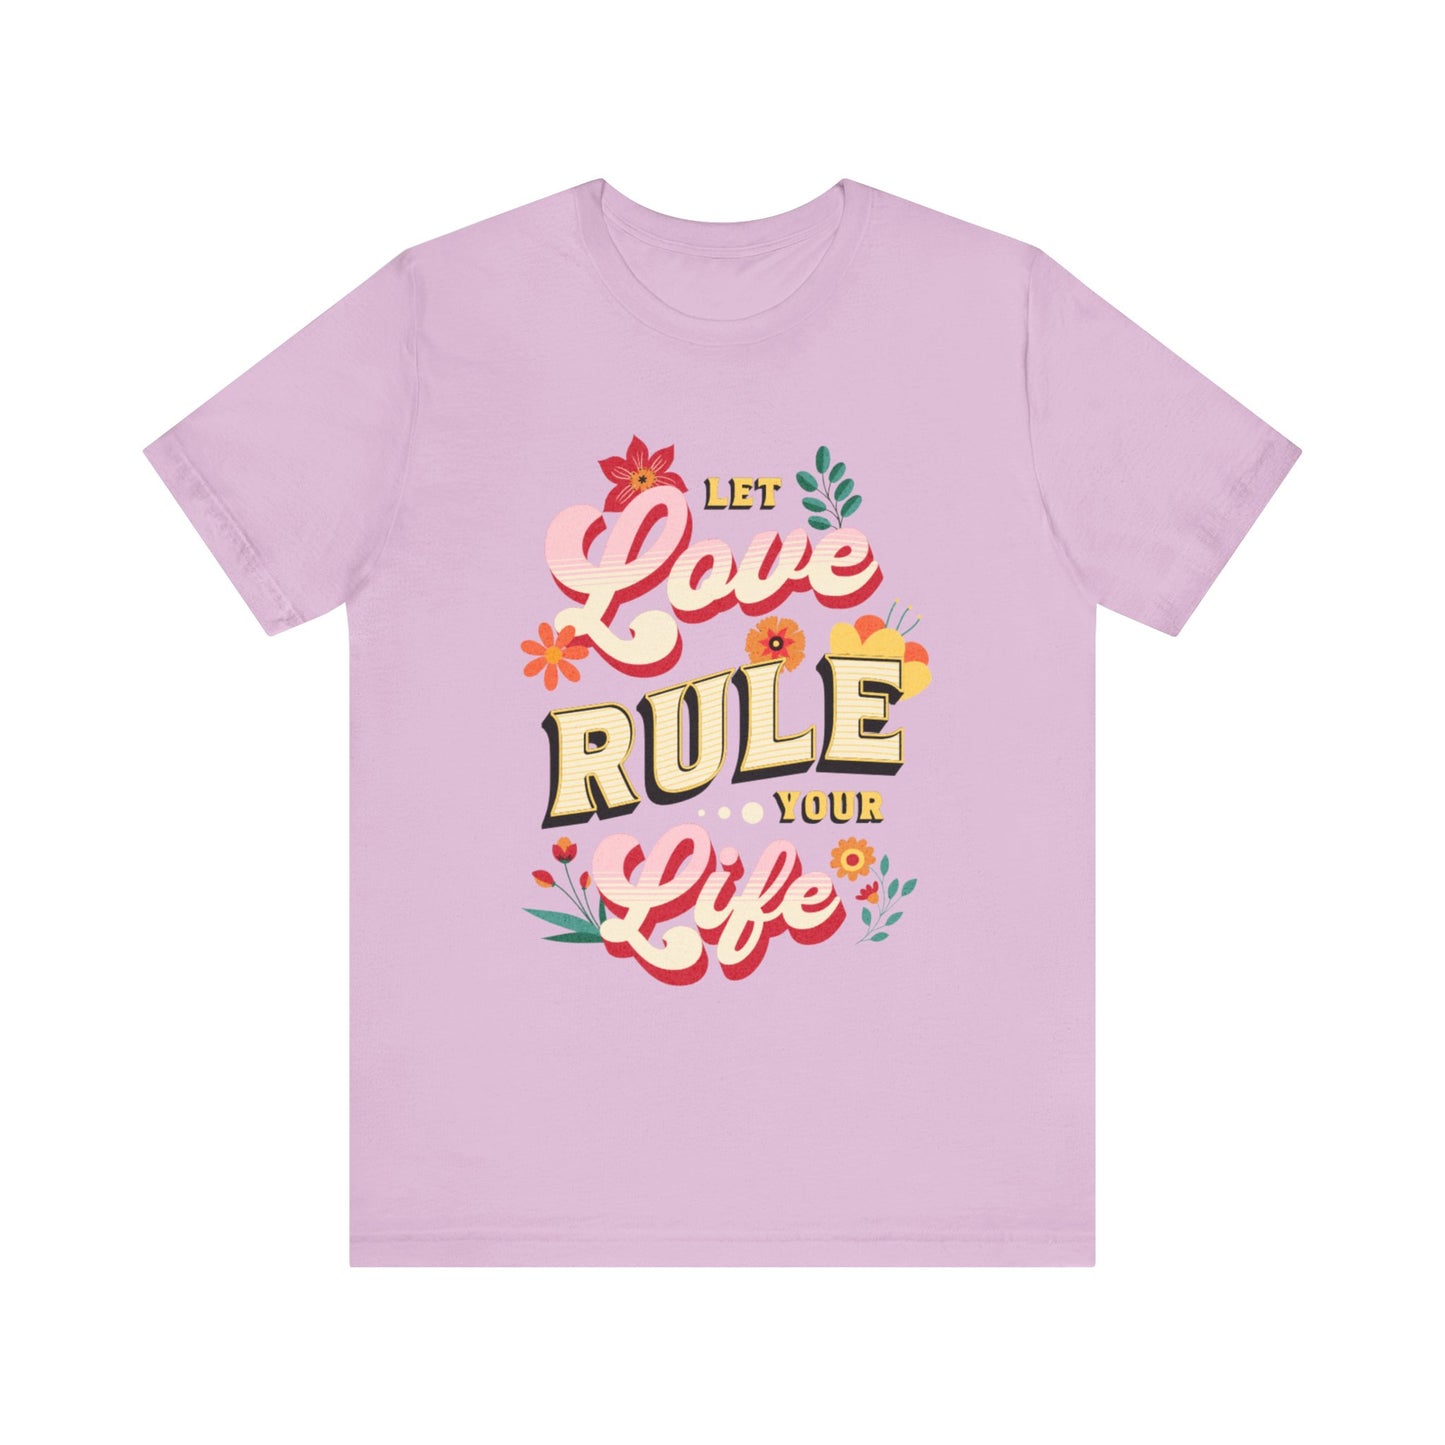 Let love rule you